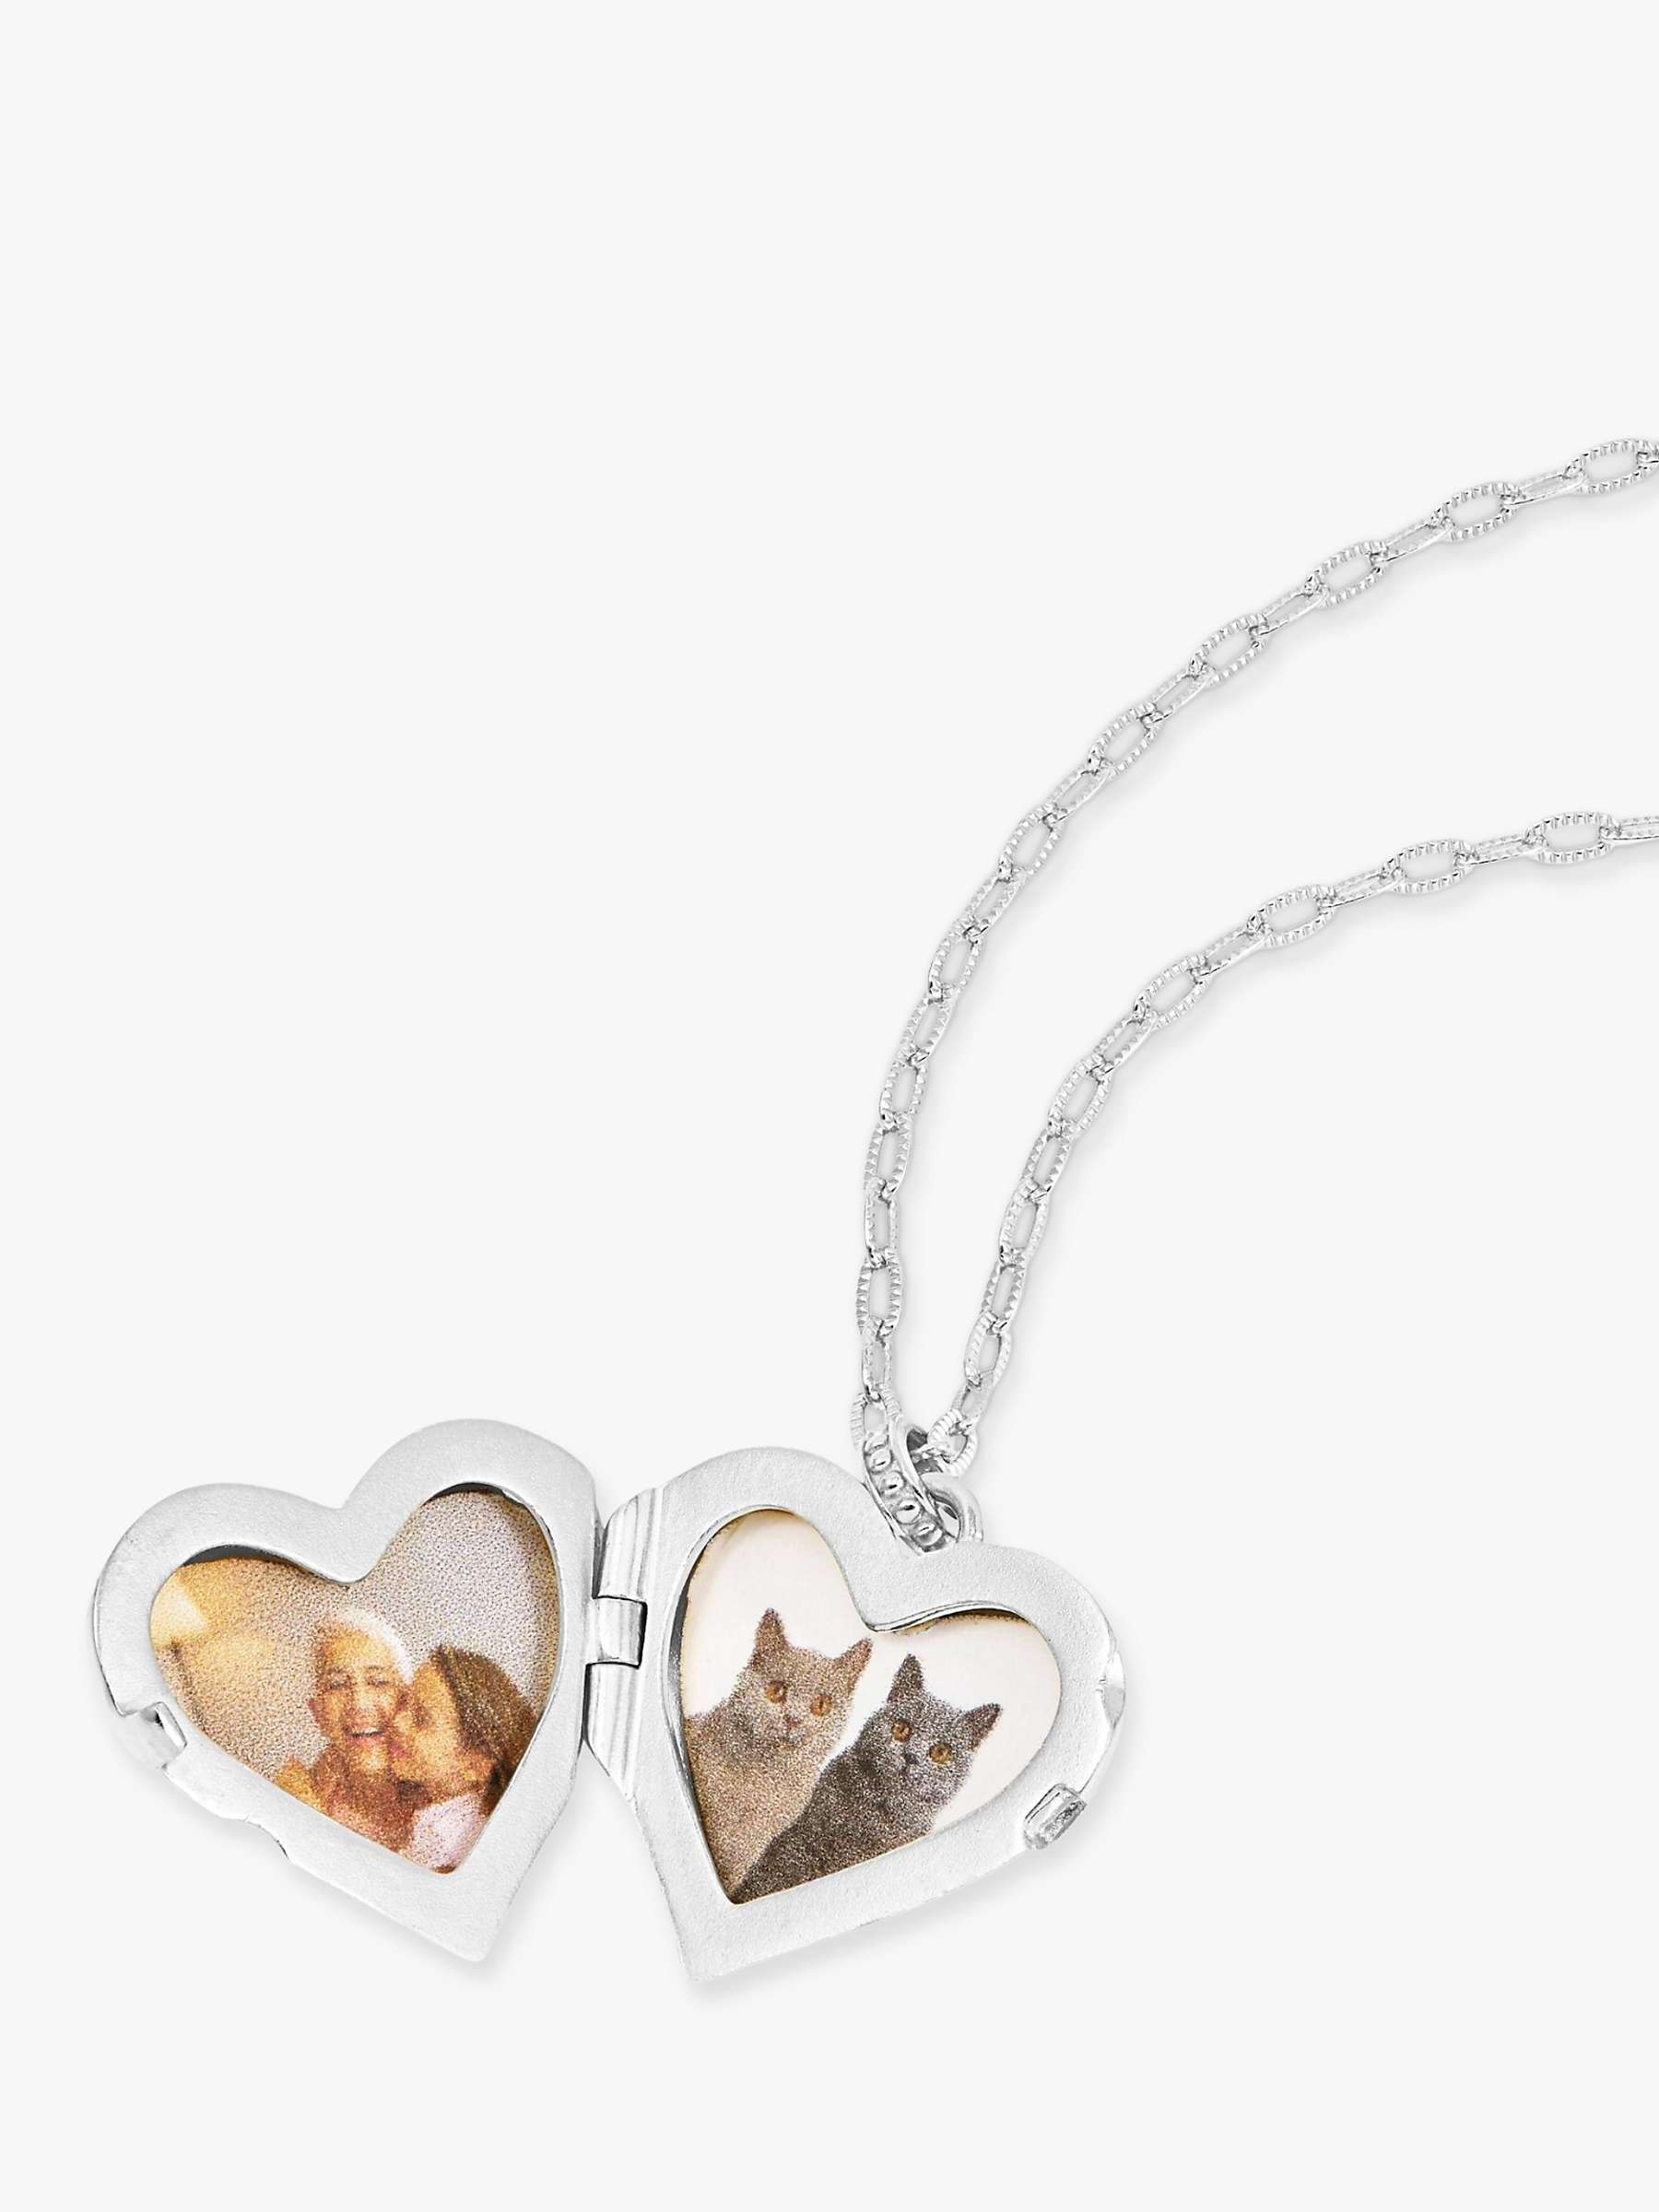 Buy Dower & Hall Treasured Heart Locket on Millie-Grain Textured Chain Online at johnlewis.com